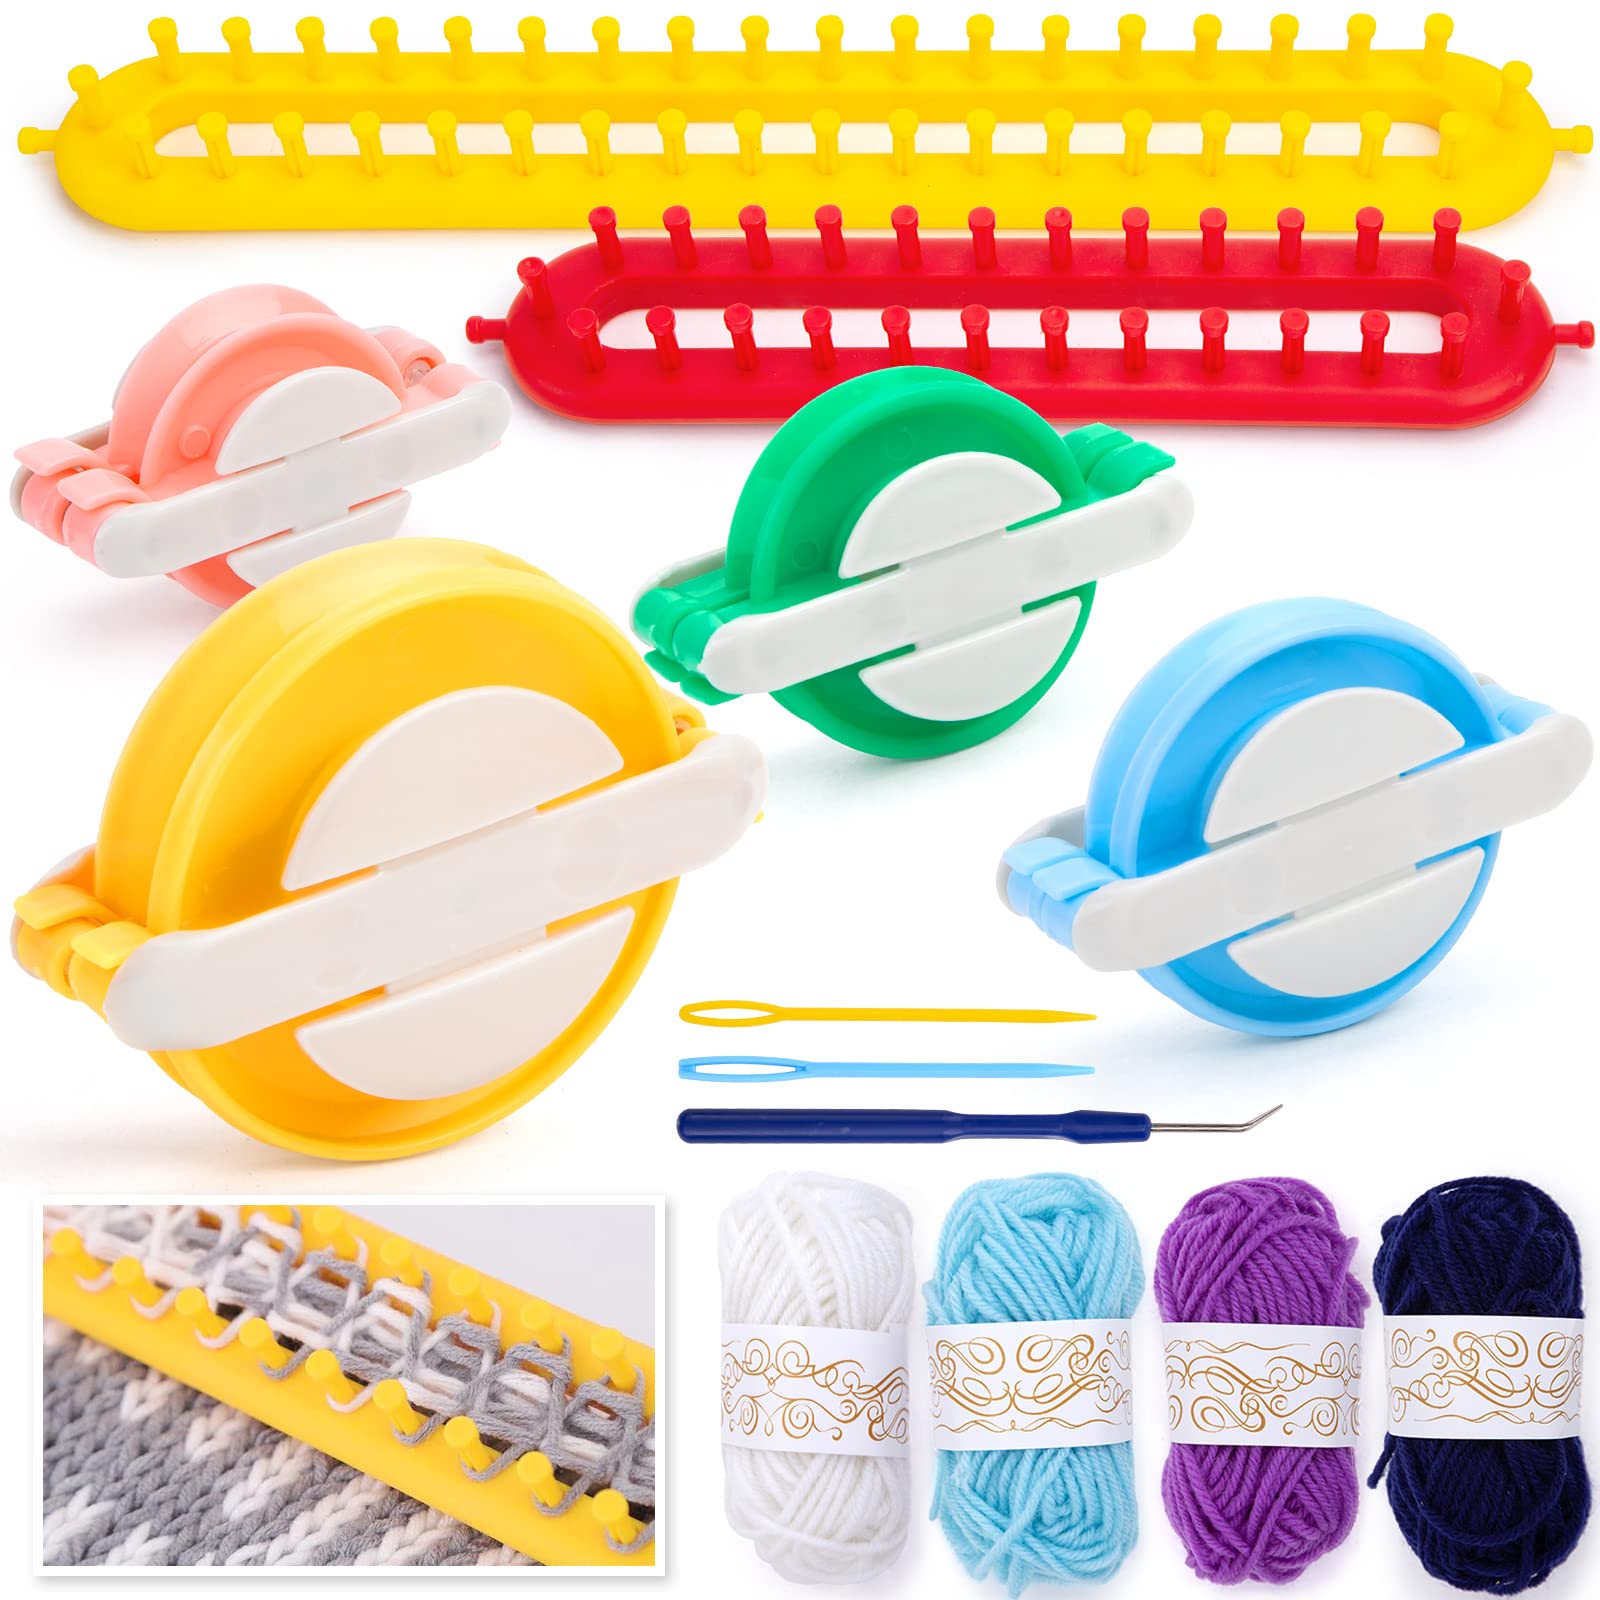 Plastic Hat Scarf Knitting Loom Kit, Knitting Loom Beginners